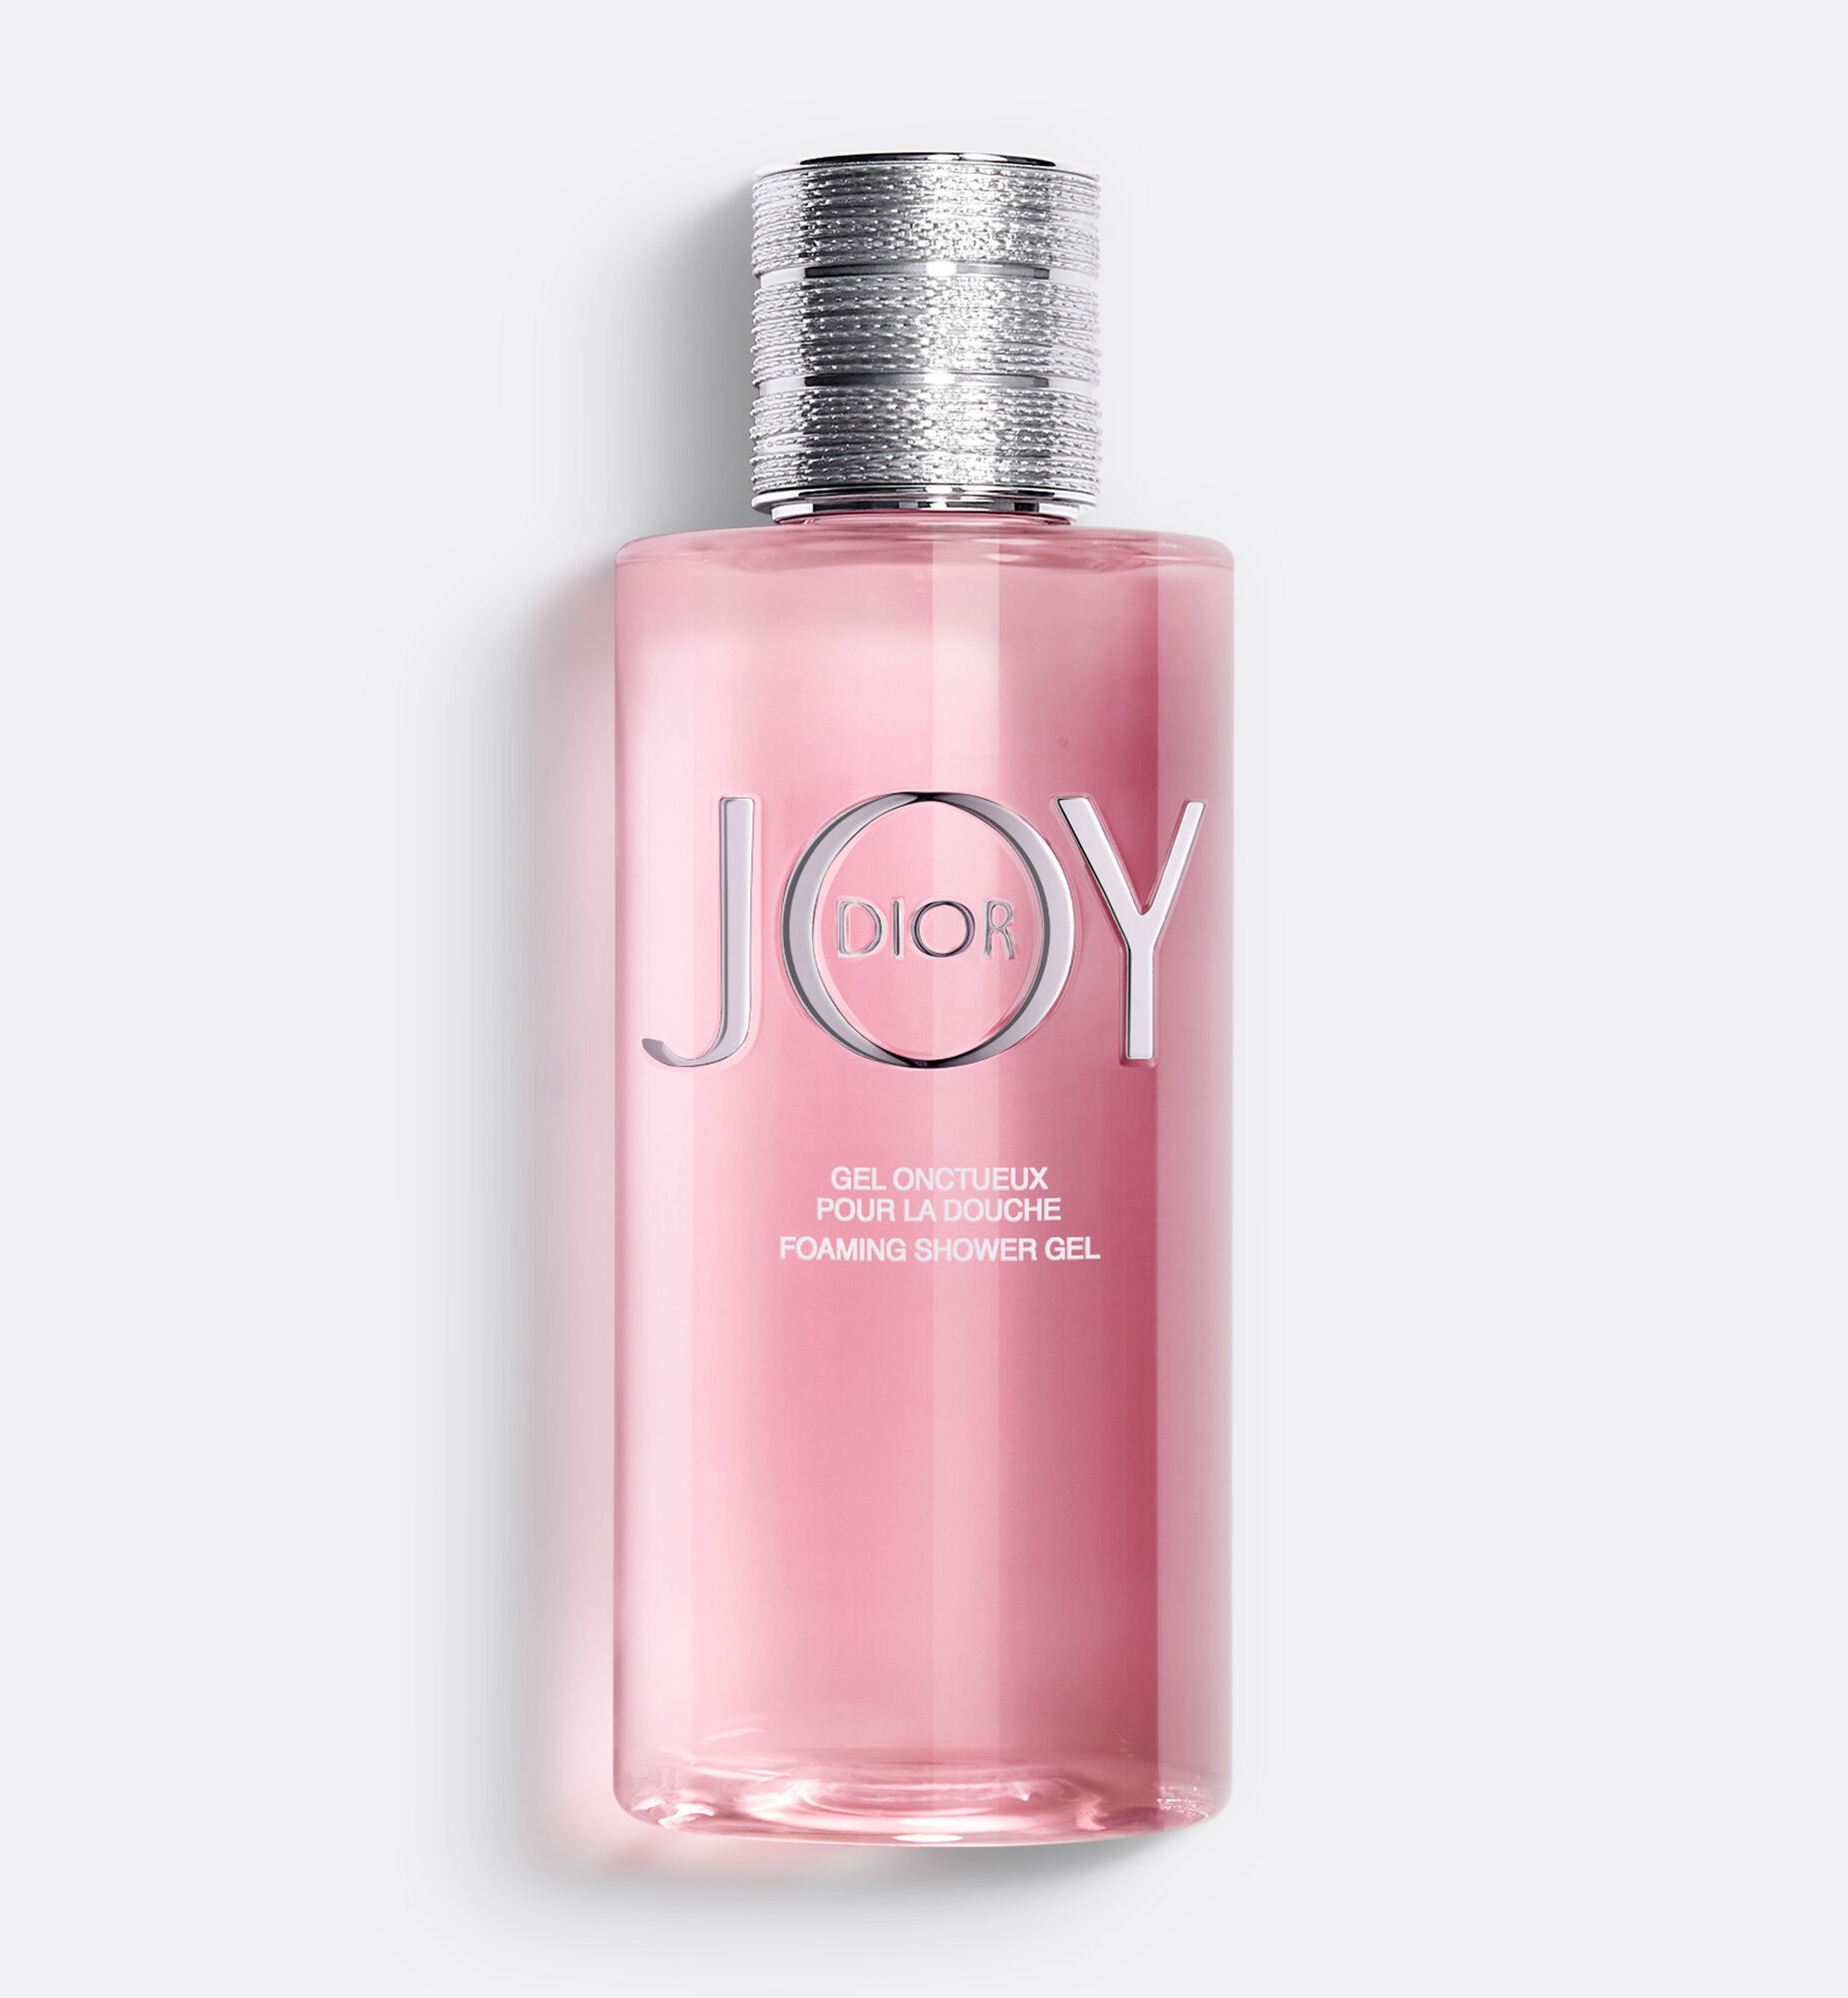 Dior Joy by Christian Dior Eau De Parfum Intense Parfum Women 17 oz New  Unbox  eBay